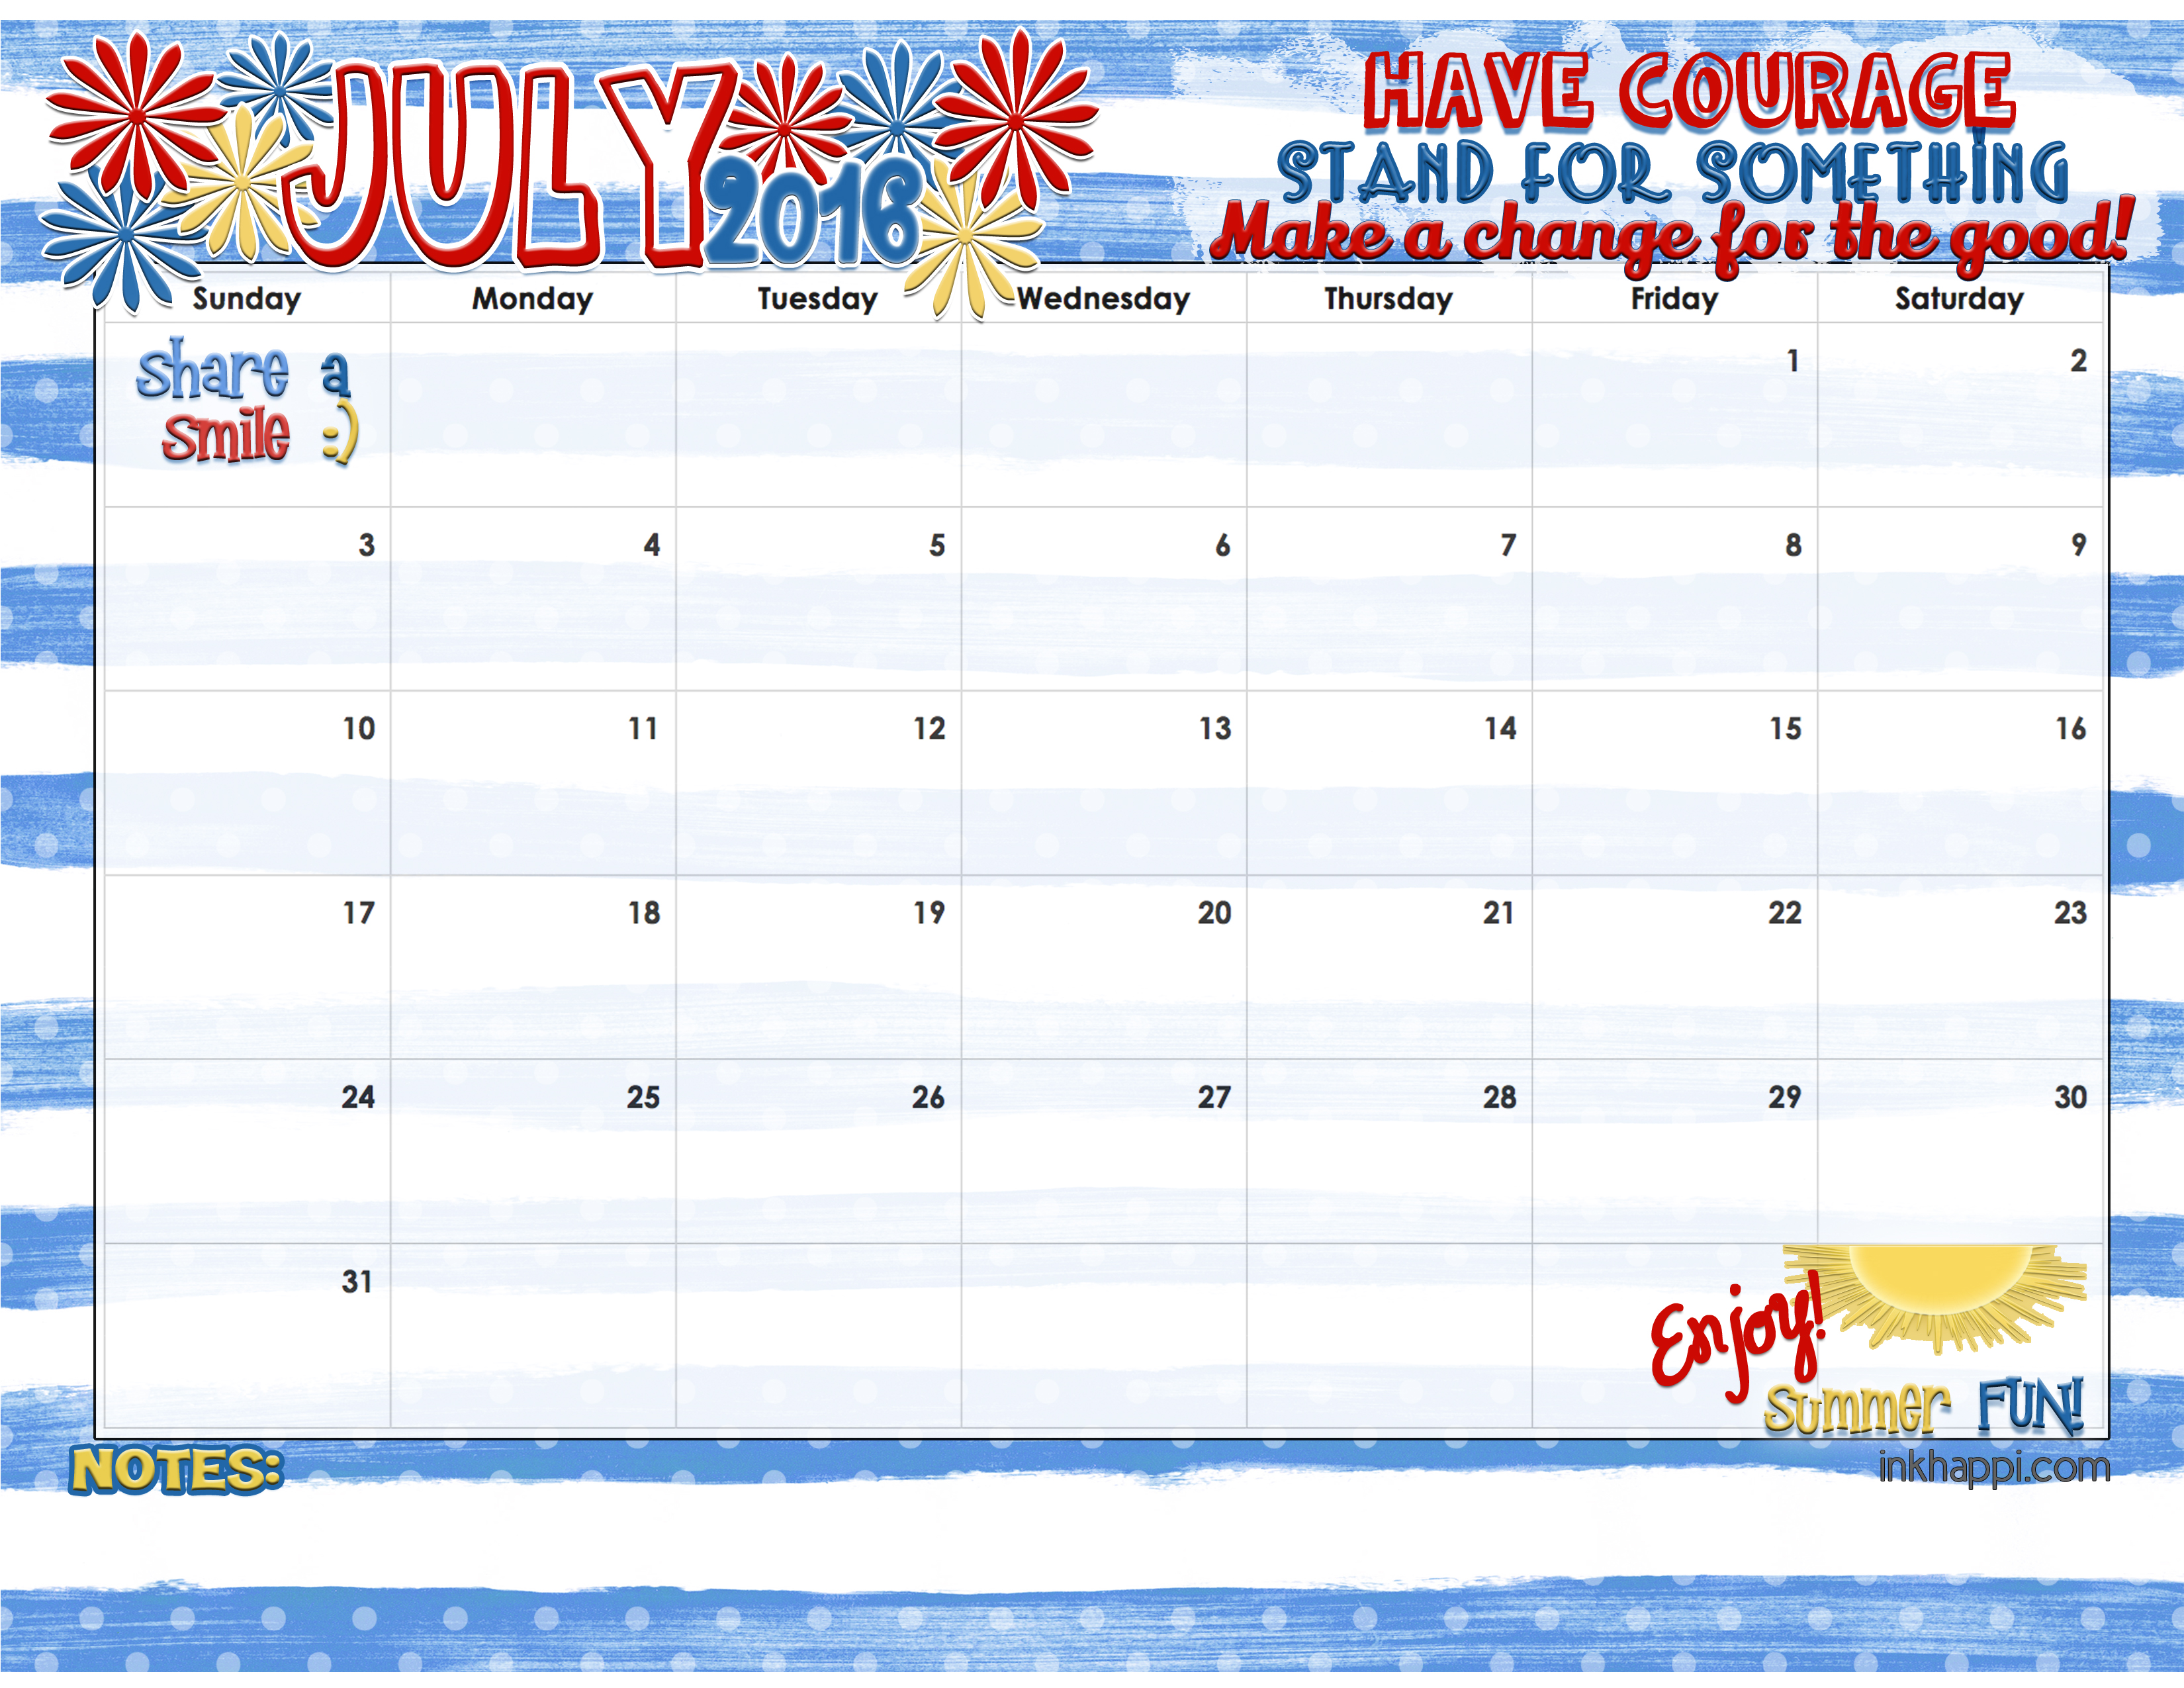 July 2016 Calendar and Print inkhappi